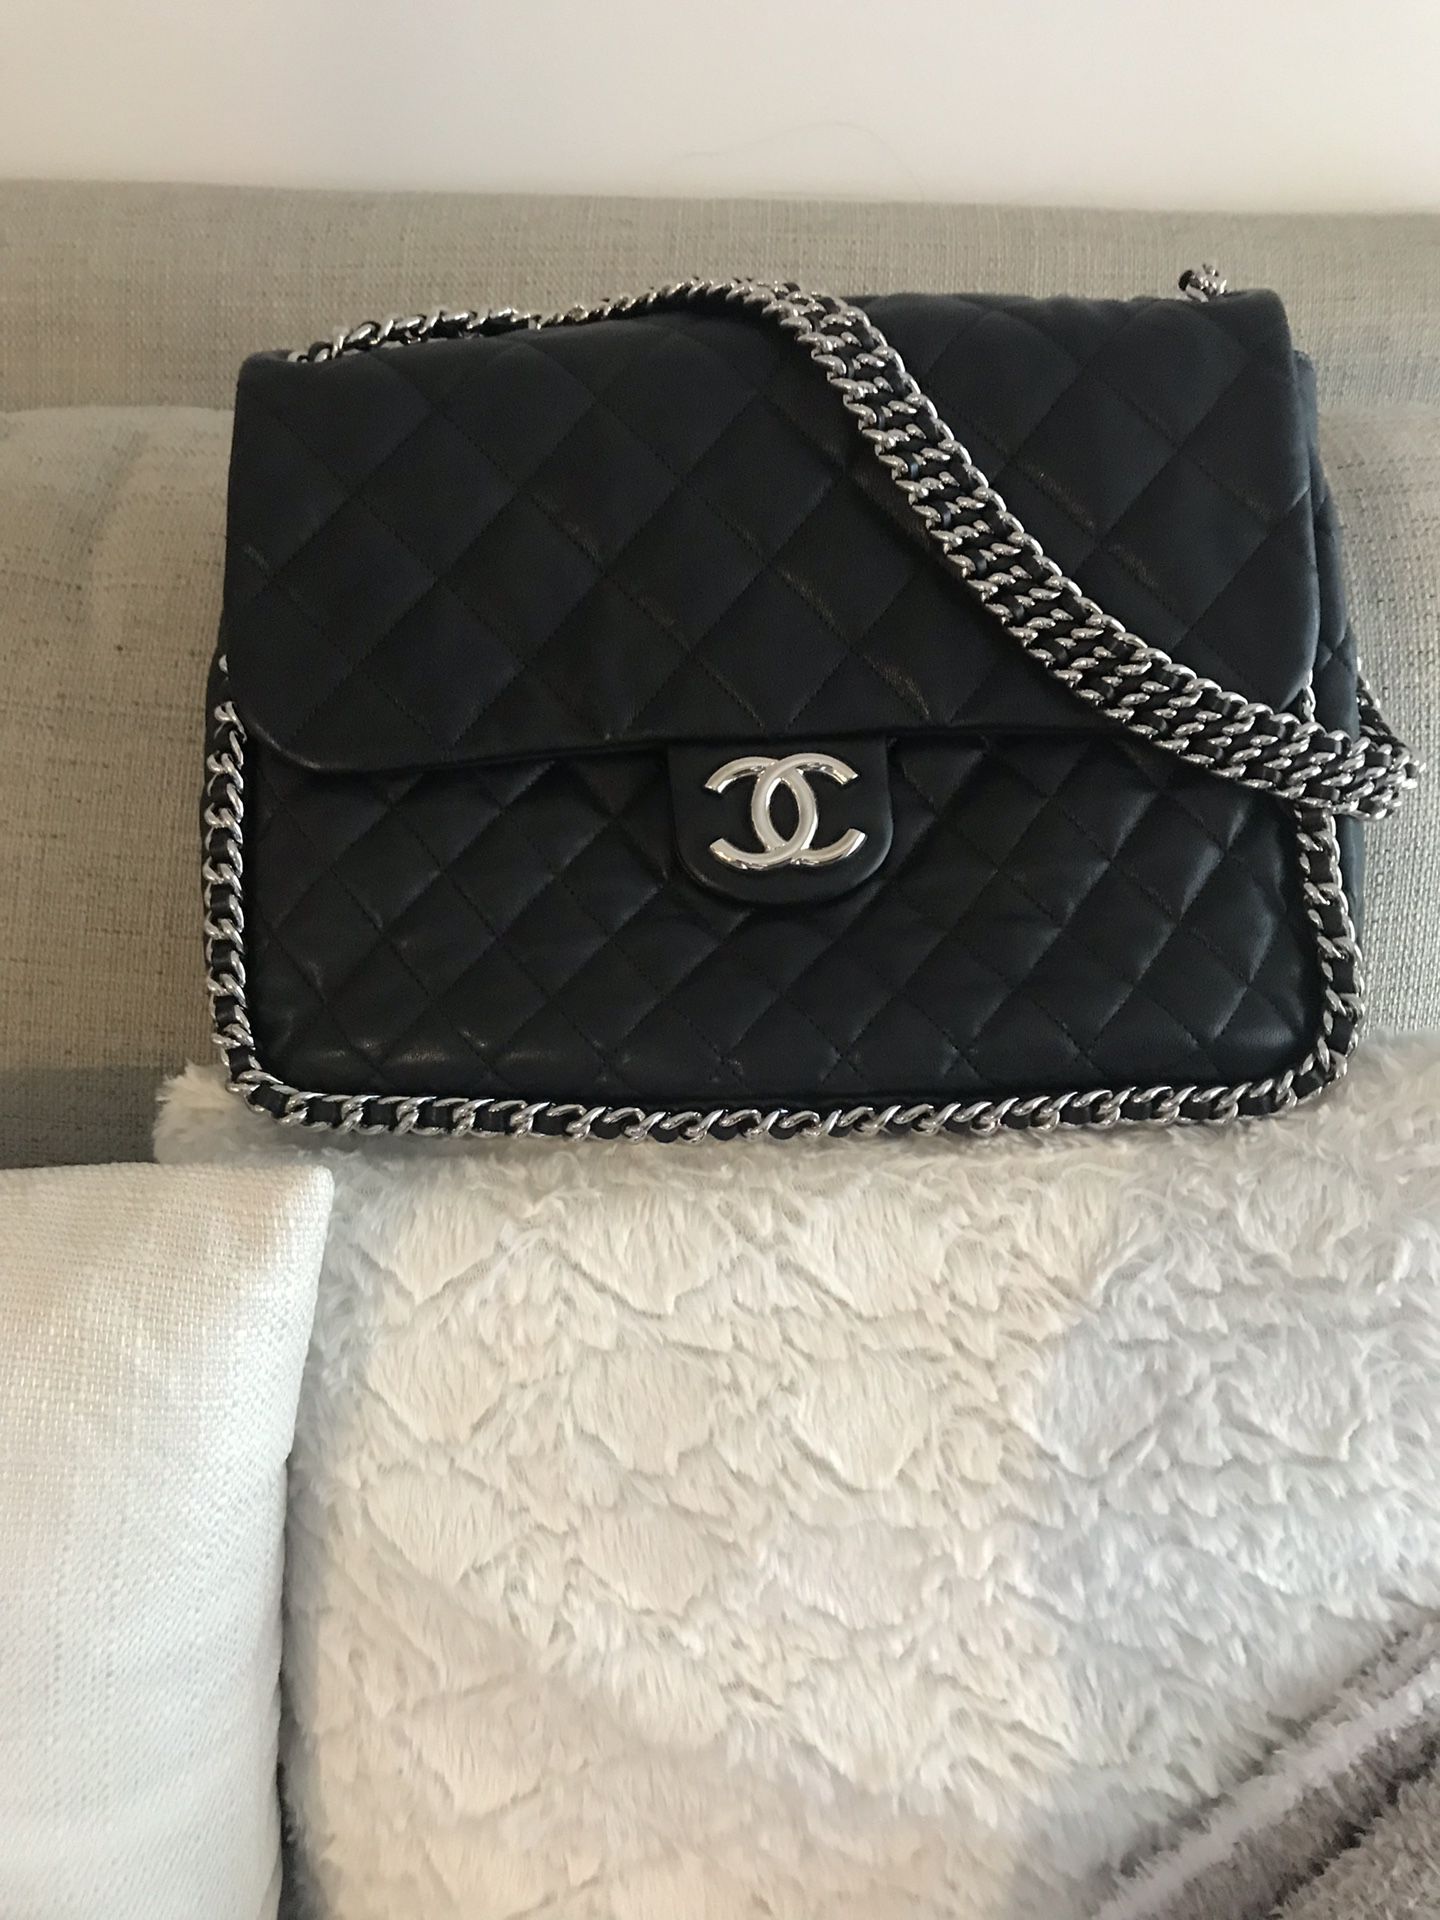 Beautiful Chanel bag ,